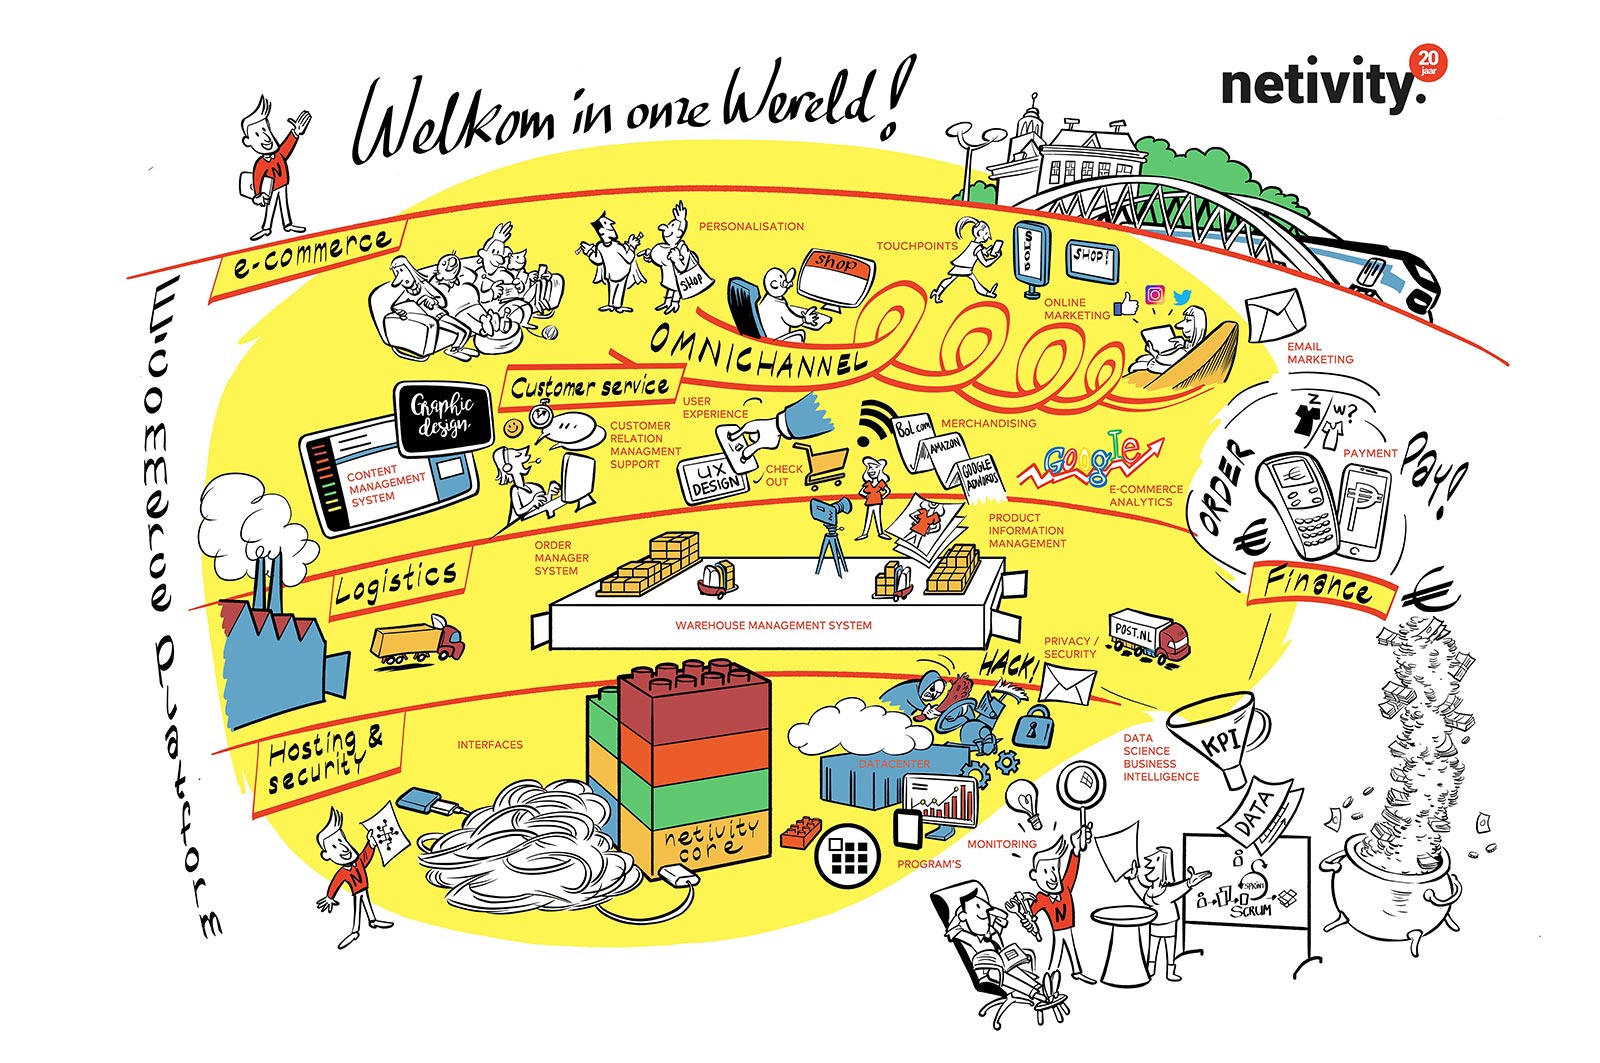 draw-up-portfolio-jeroen-steehouwer-netivity-welkom